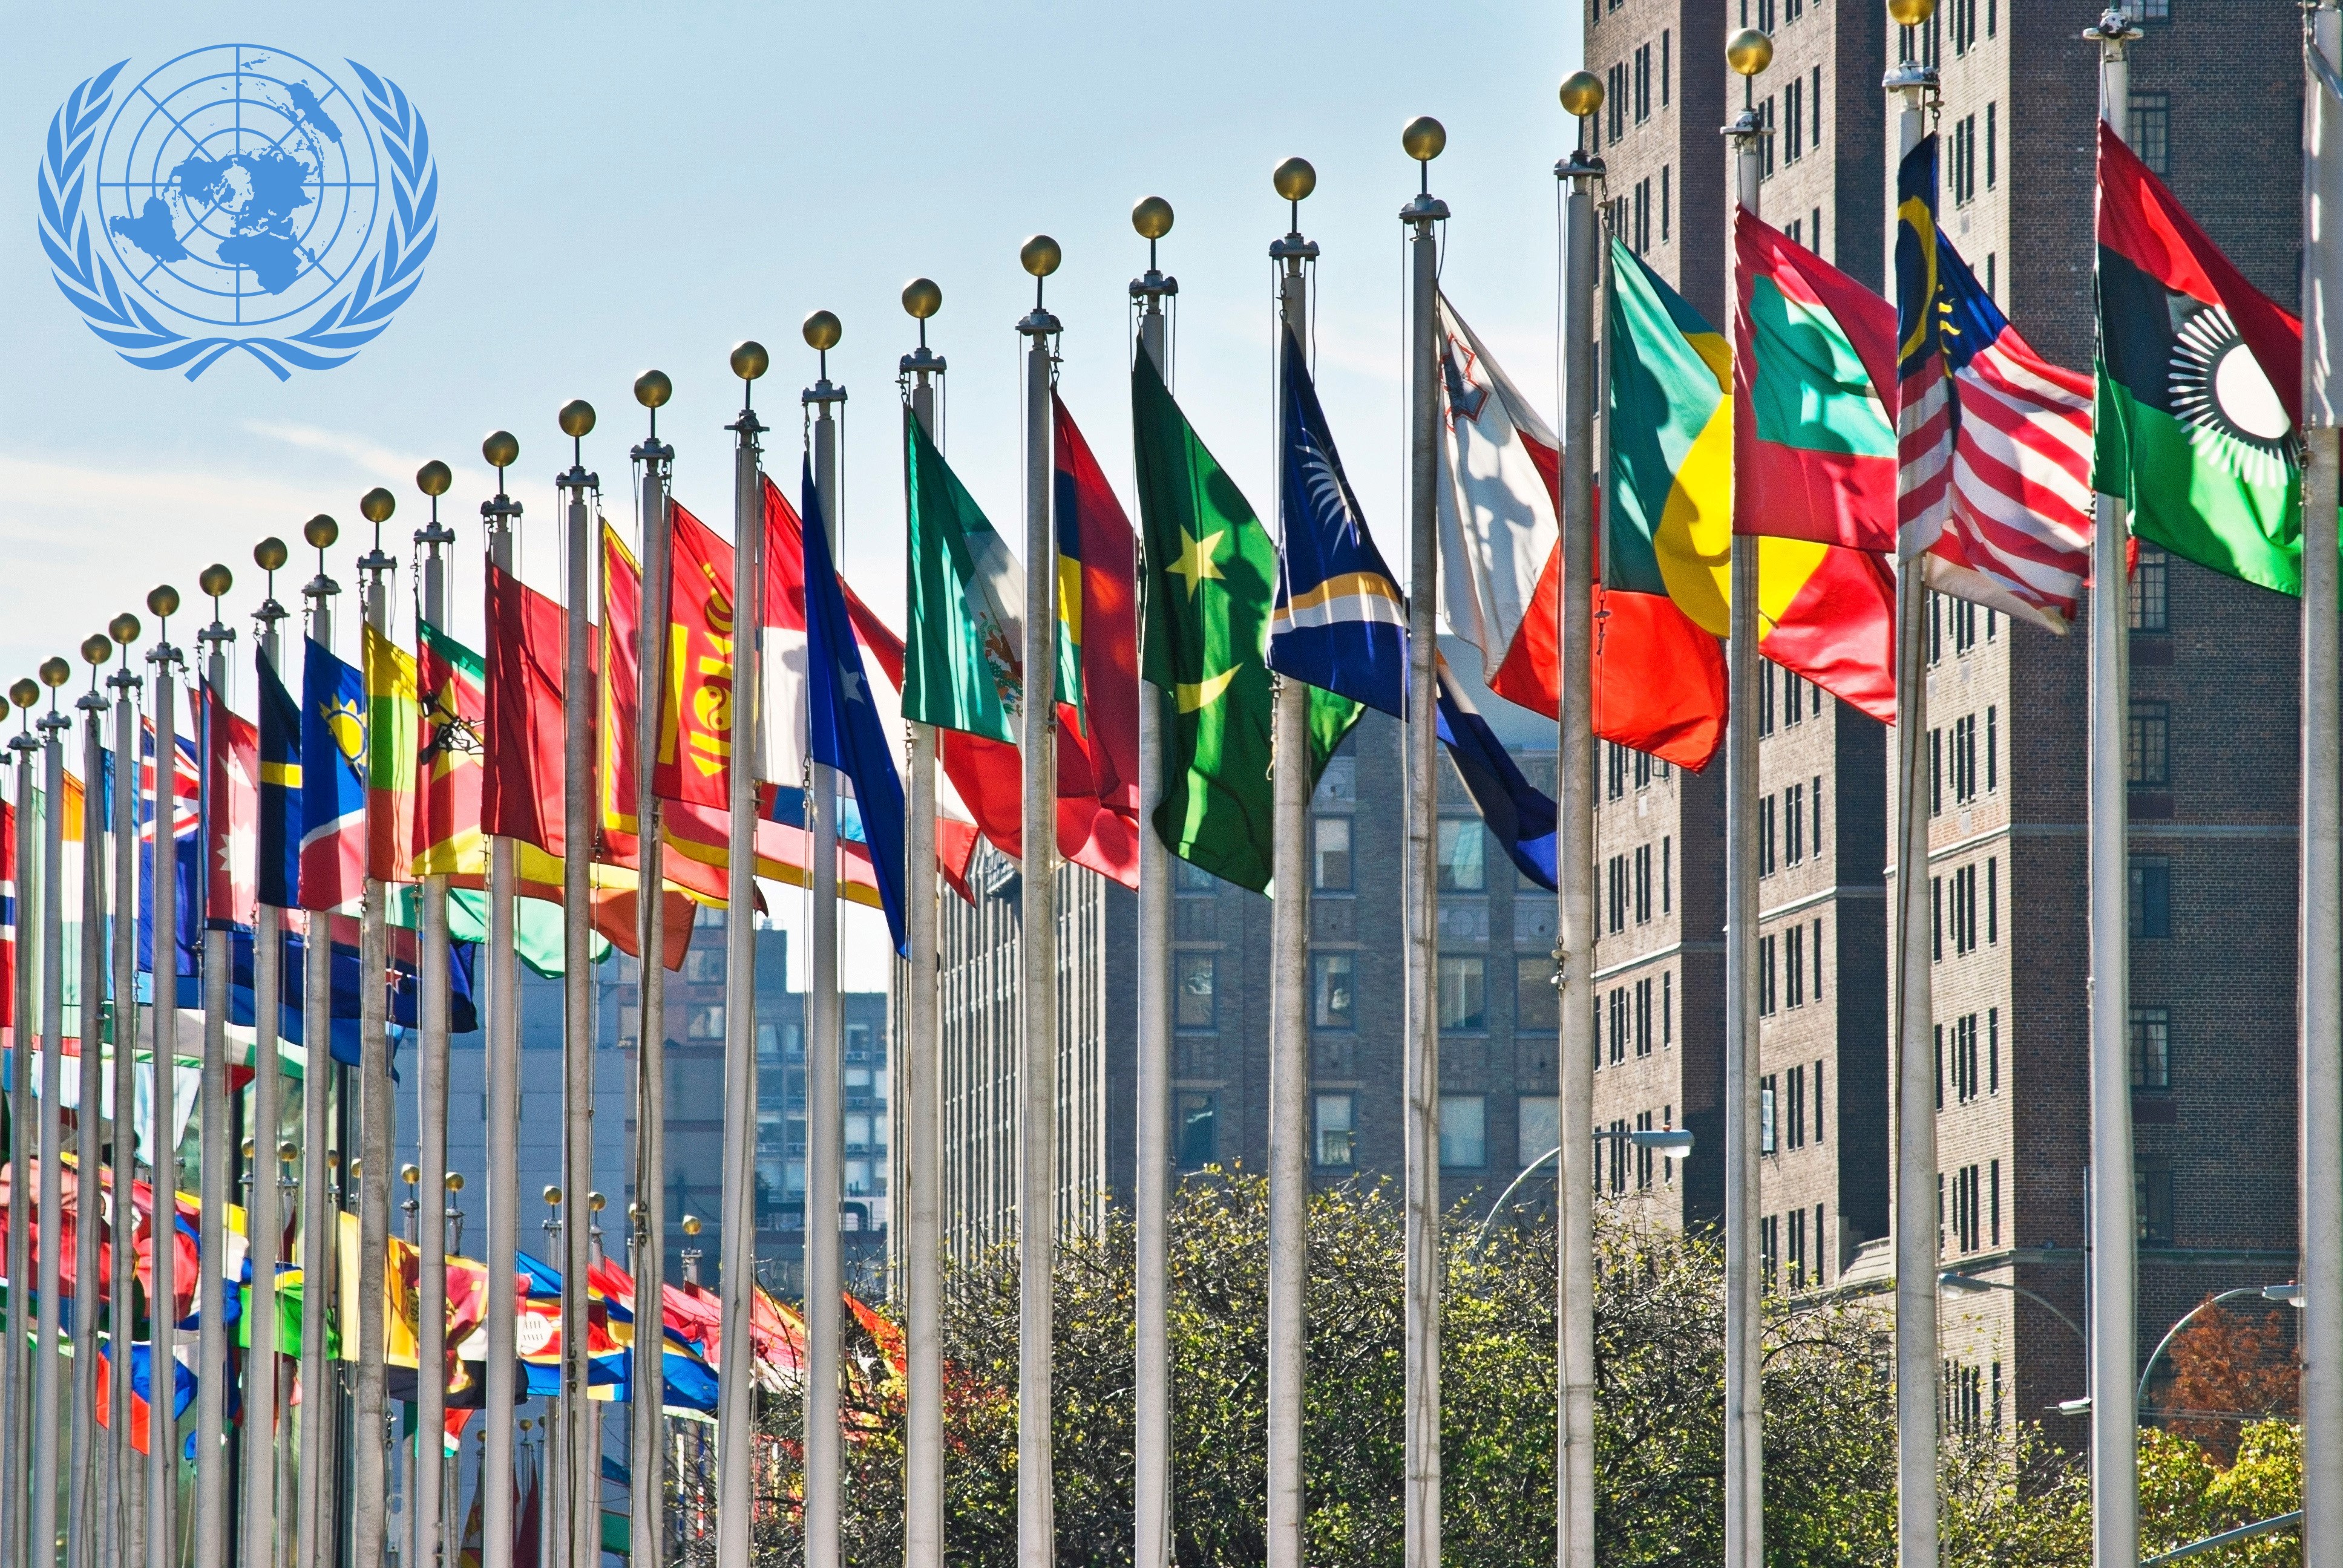 United world nation. Здание ООН В Нью-Йорке флаги. Здание ООН (организации Объединённых наций) в Нью-Йорке. Флаги государств ООН. Страны ООН флаги РФ.